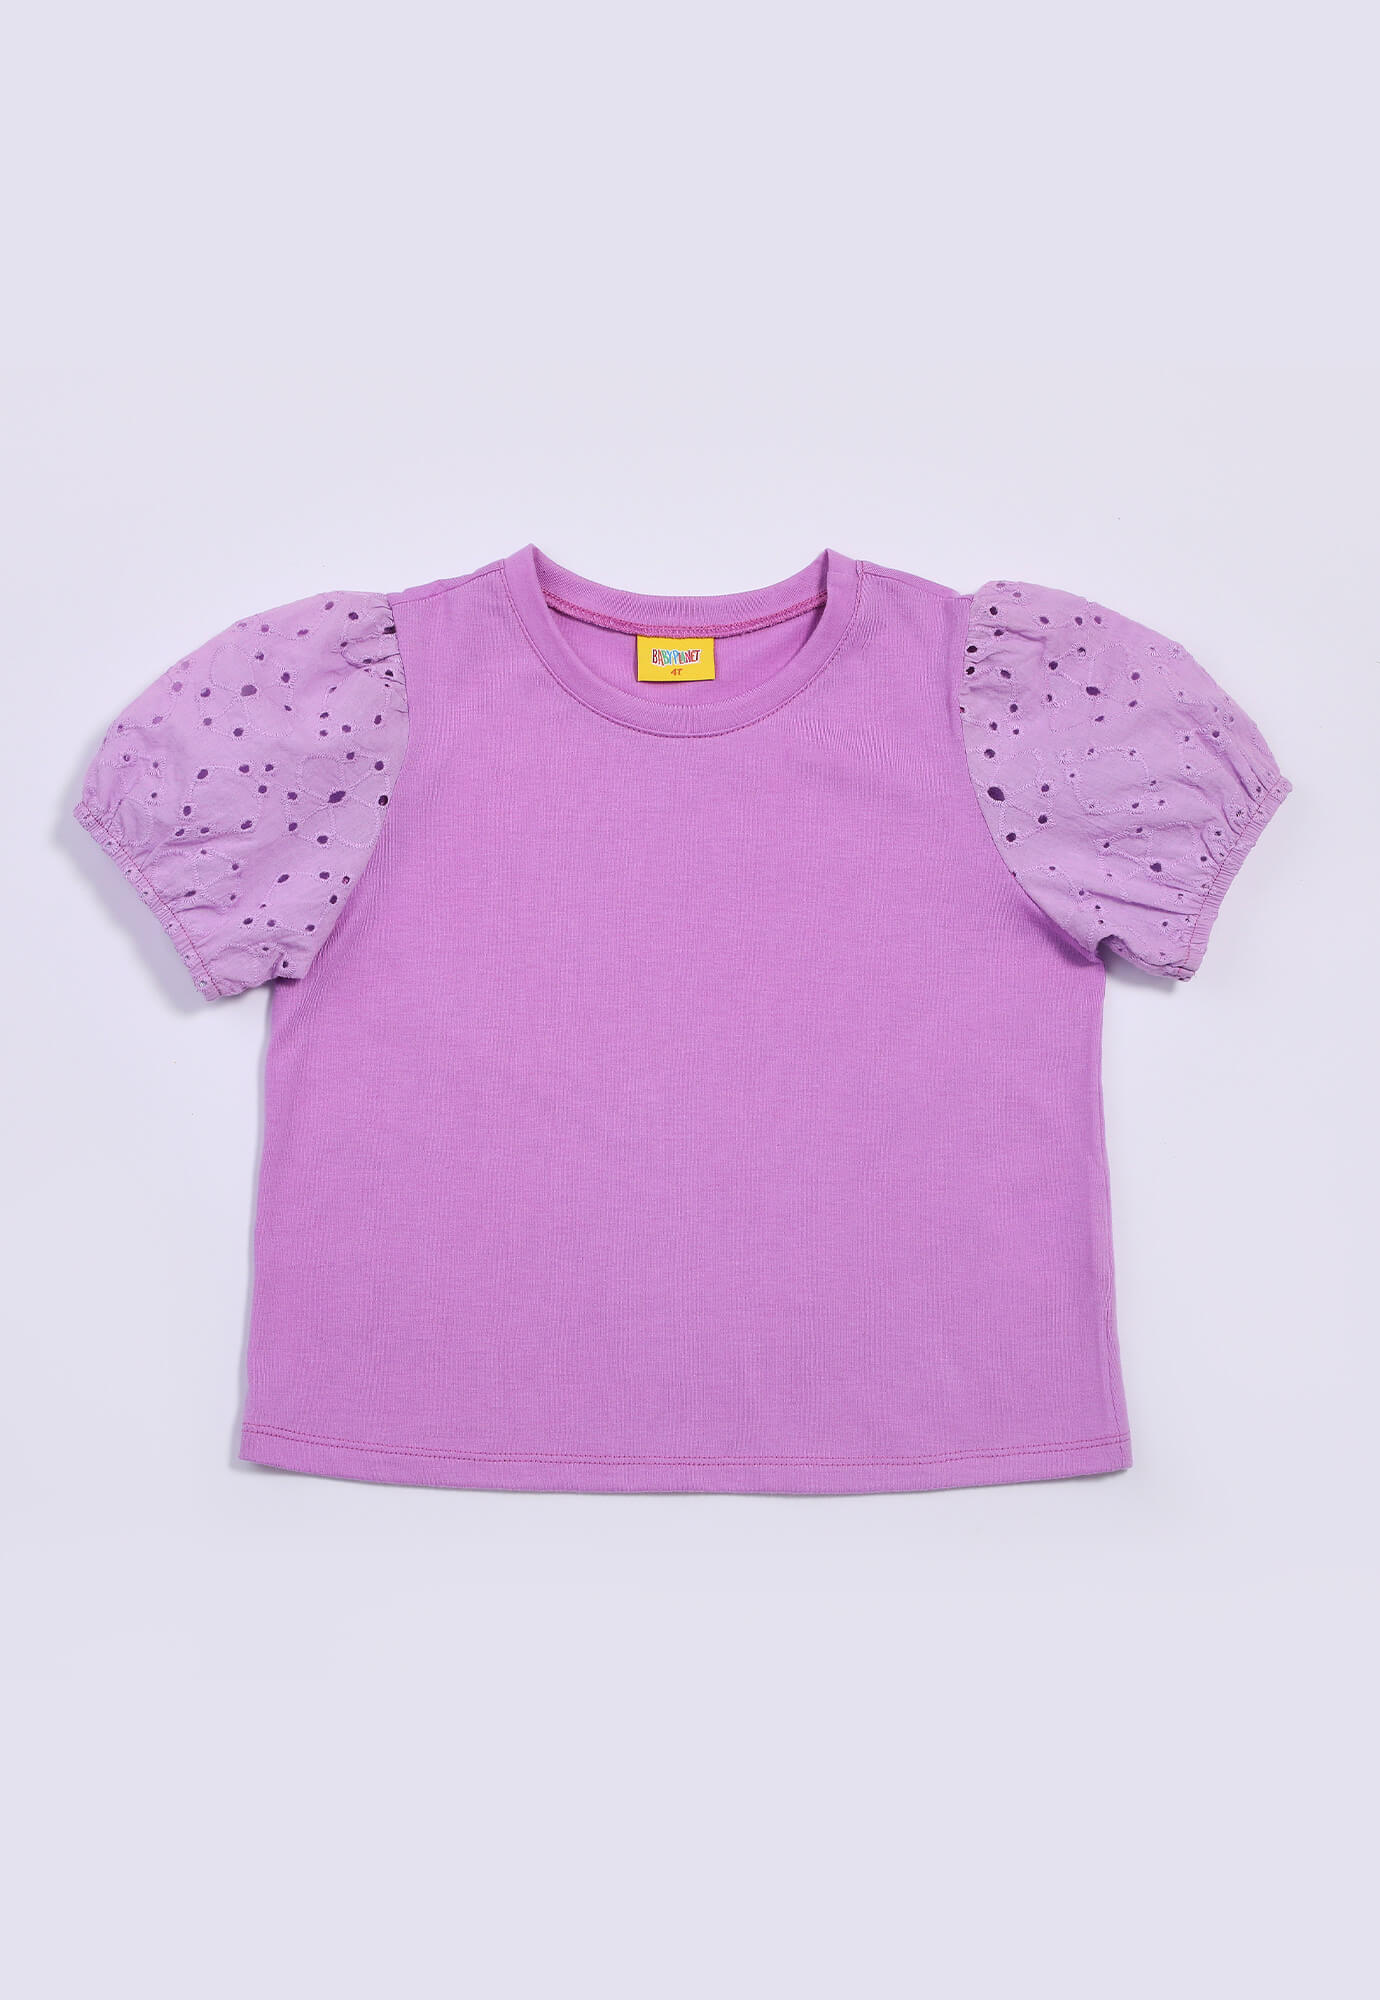 Camiseta violeta claro con ojalillo y elastico en manga para bebé niña